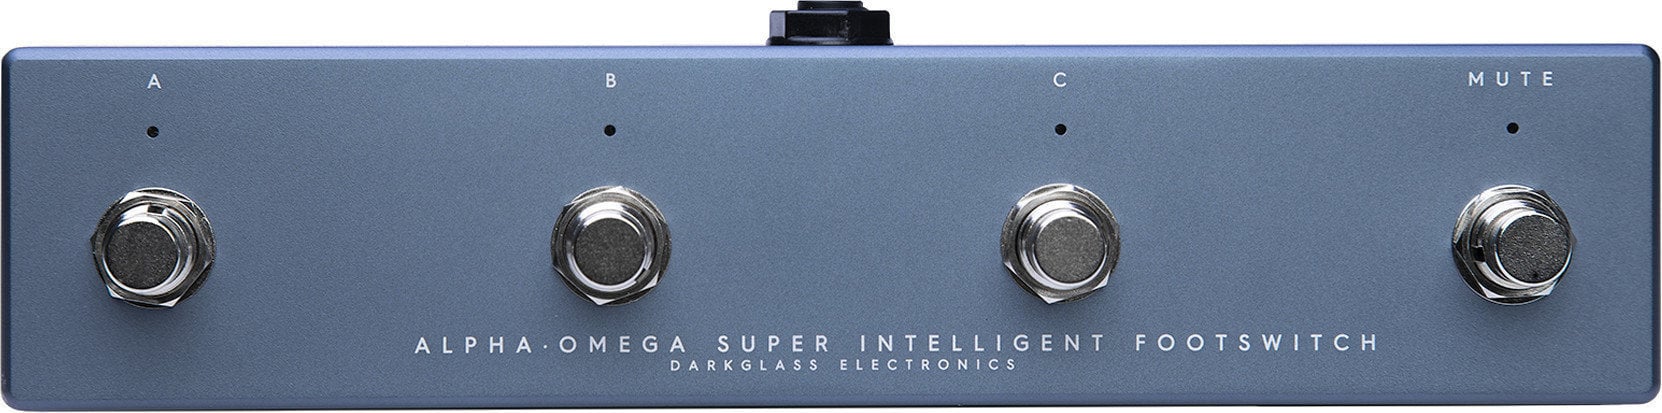 Pedal Darkglass Alpha Omega Super Intelligent Pedal